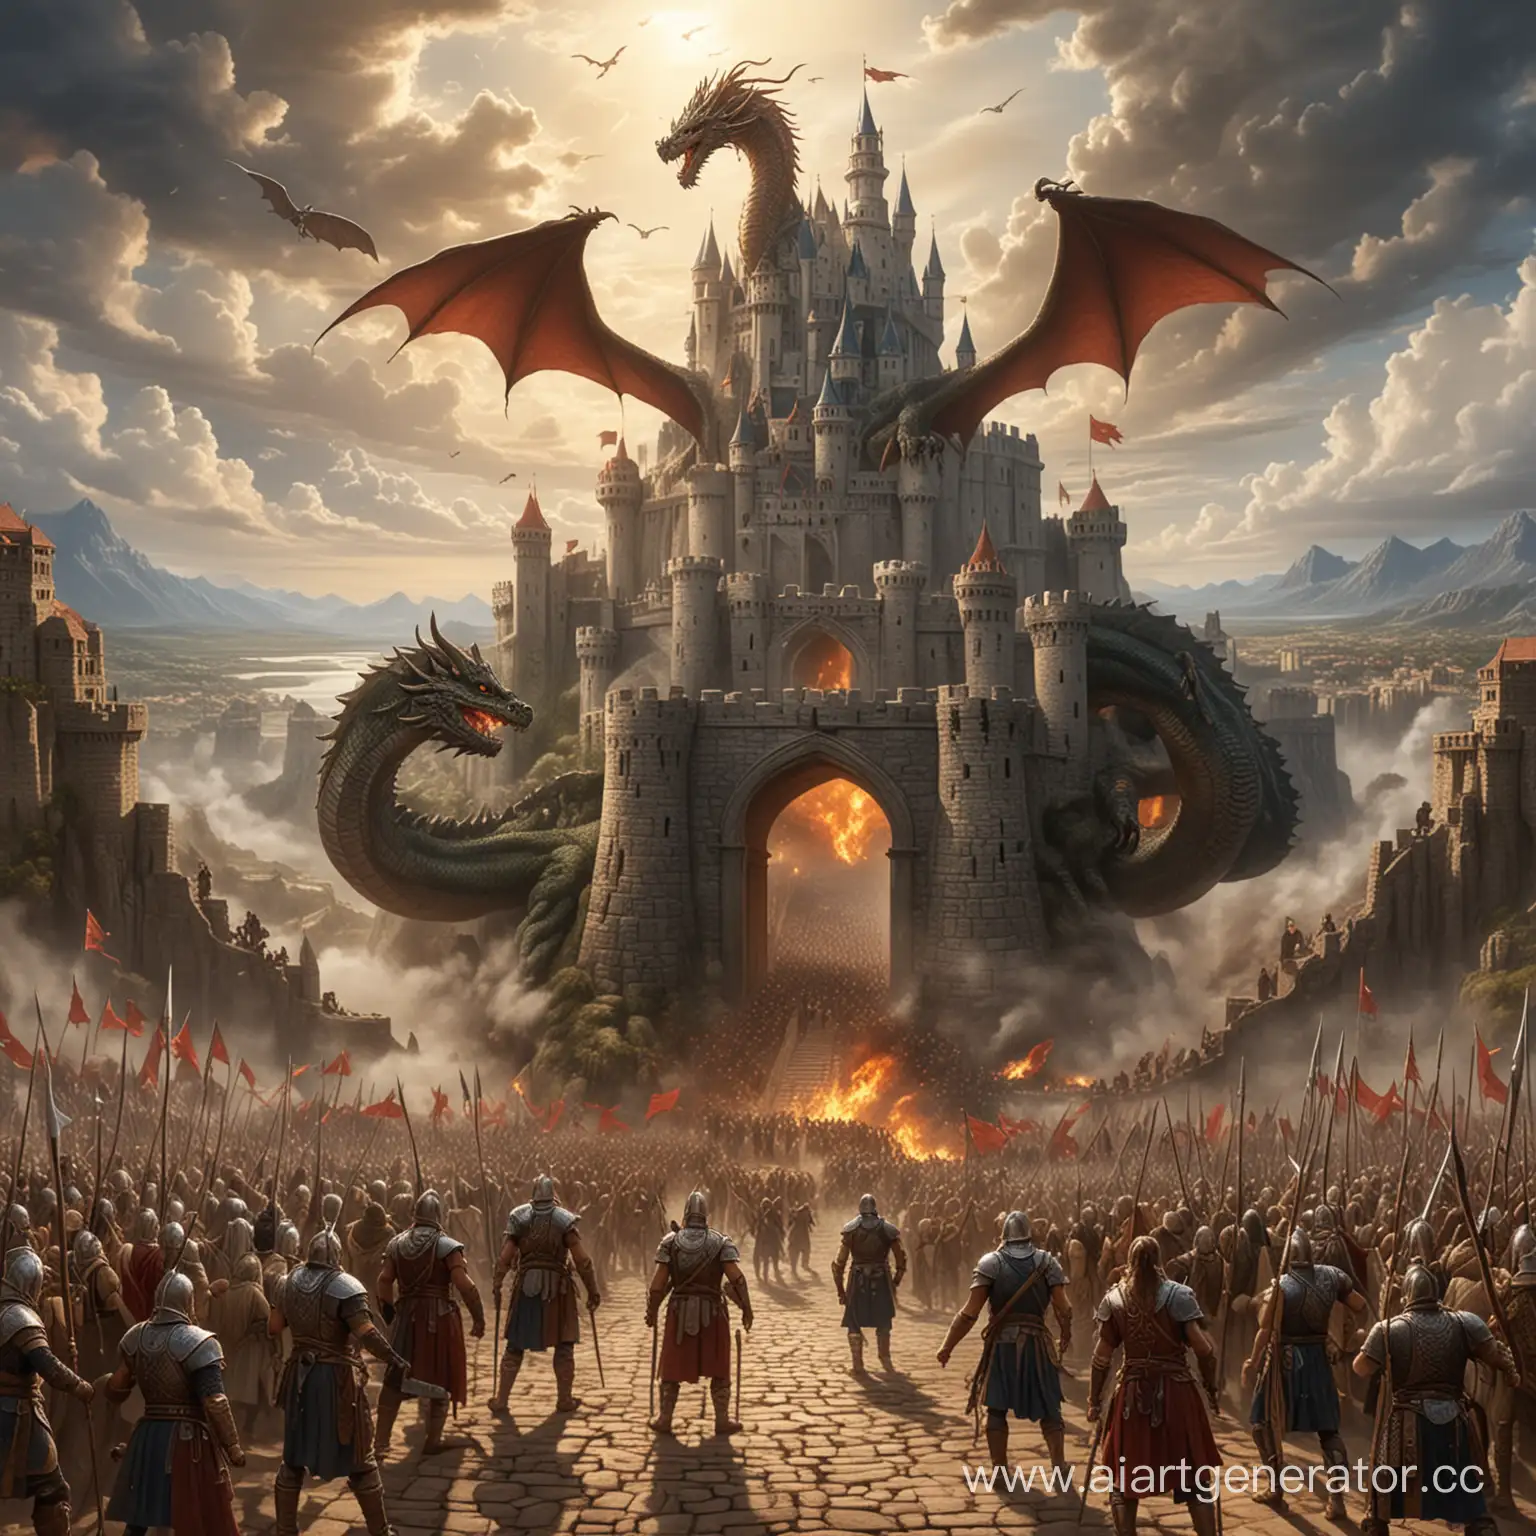 Divine-Battles-Defending-Castle-and-Inhabitants-from-a-Dragon